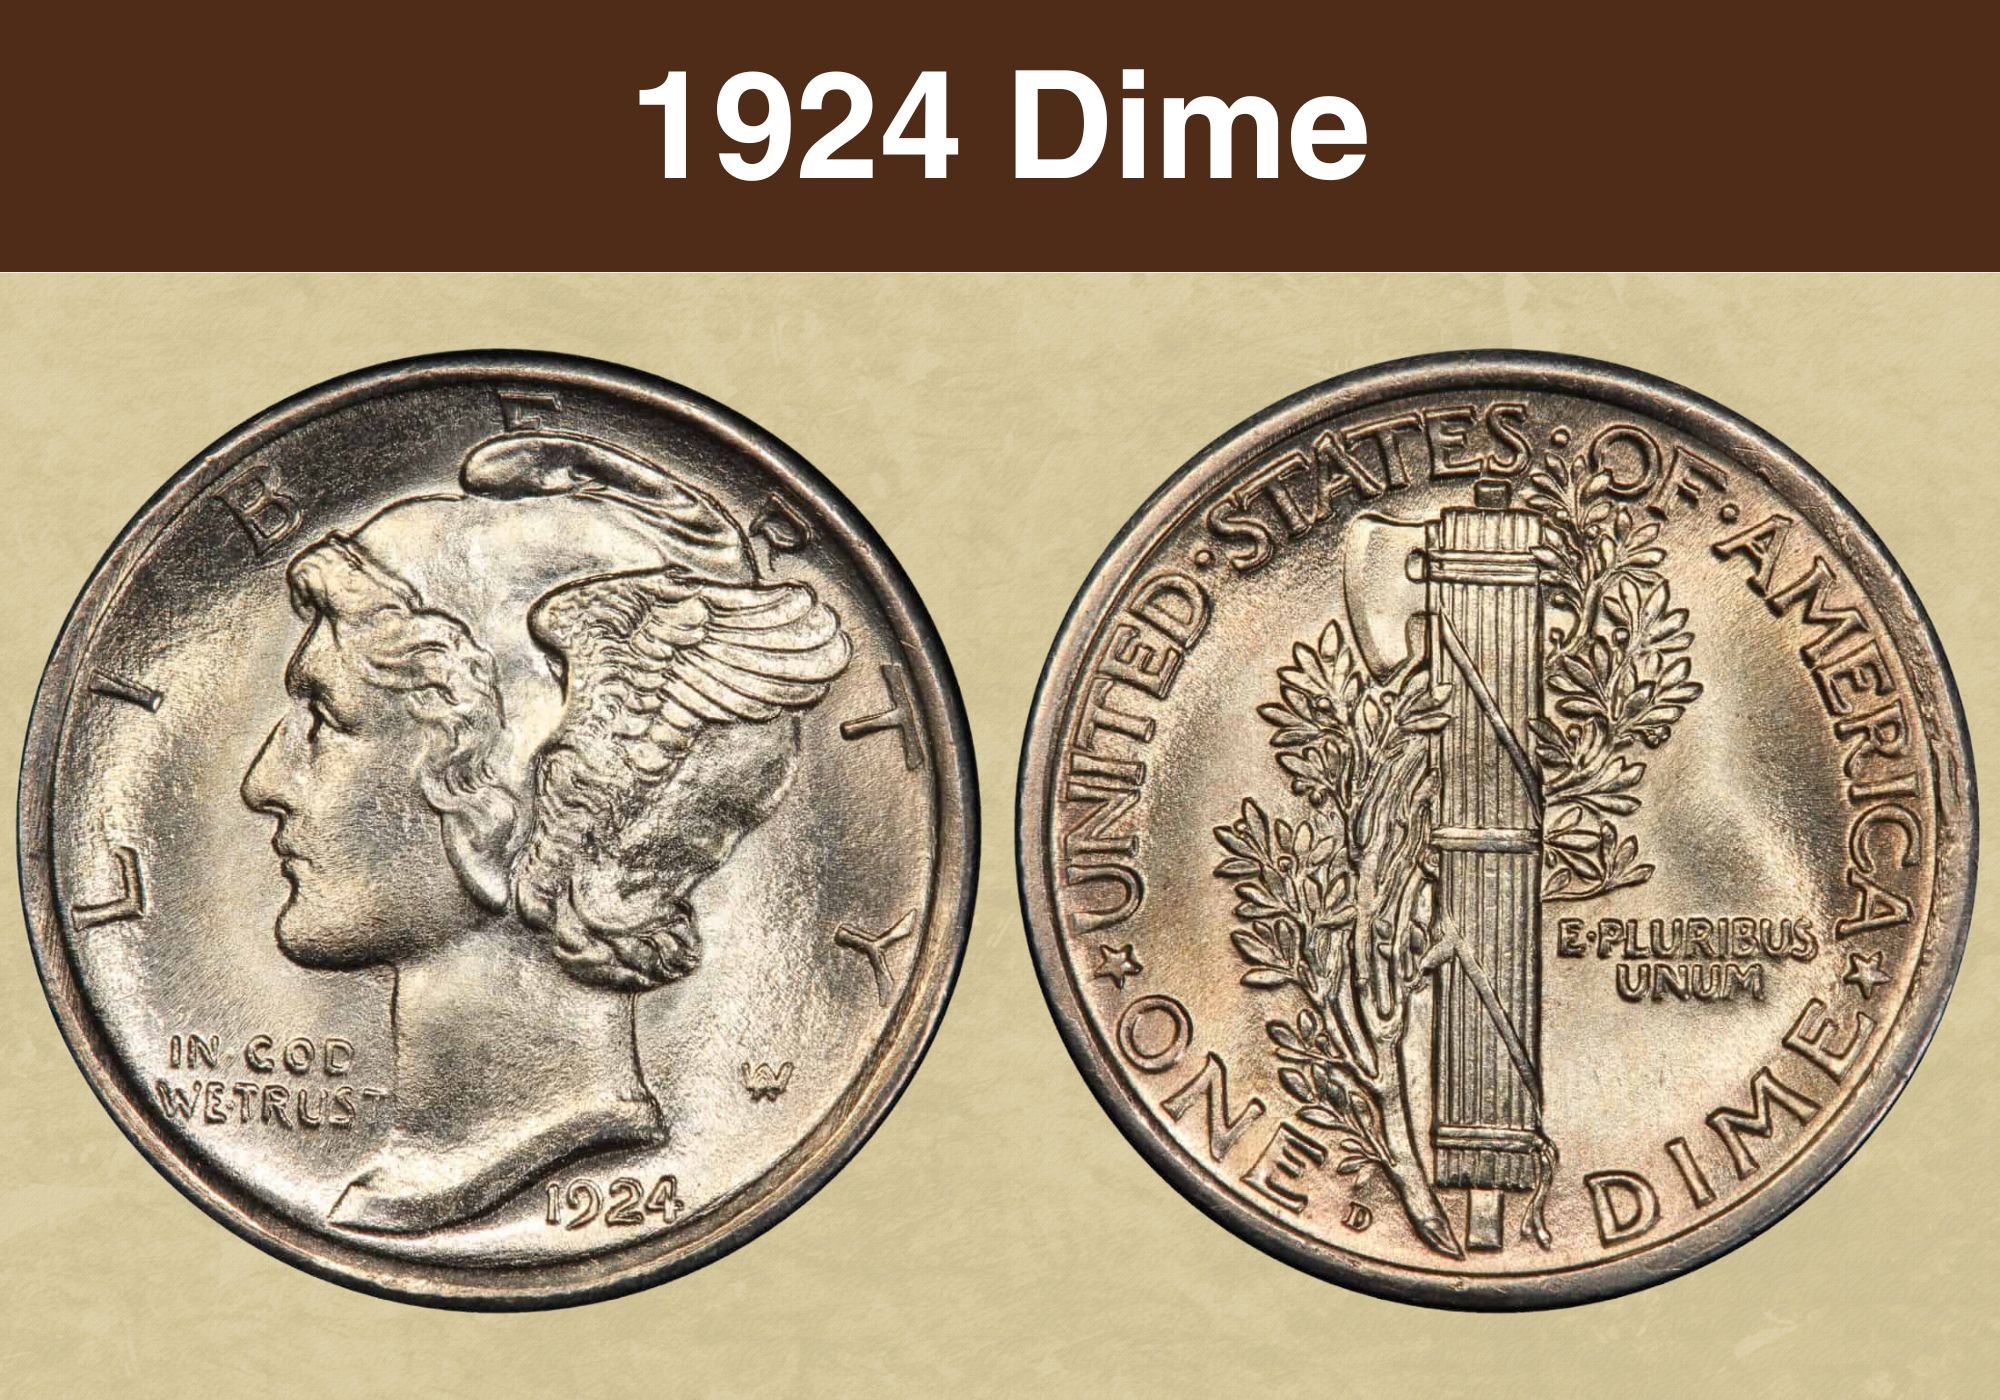 1924 Dime Value